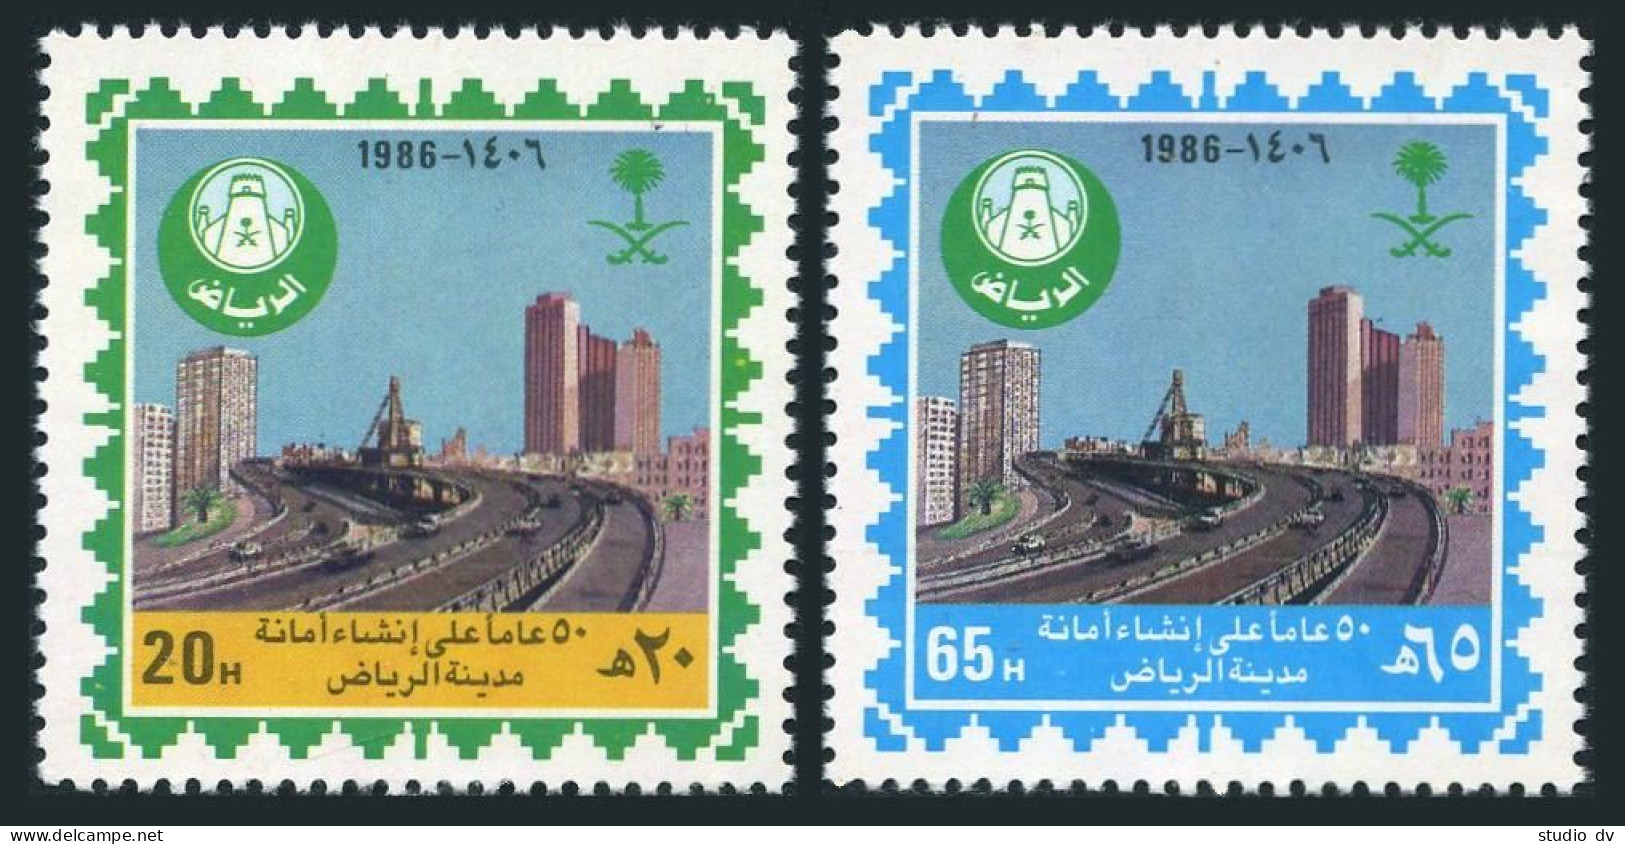 Saudi Arabia 972-973,MNH.Michel 835-836. Rijadh Municipality,50th Ann.Highway. - Saudi-Arabien